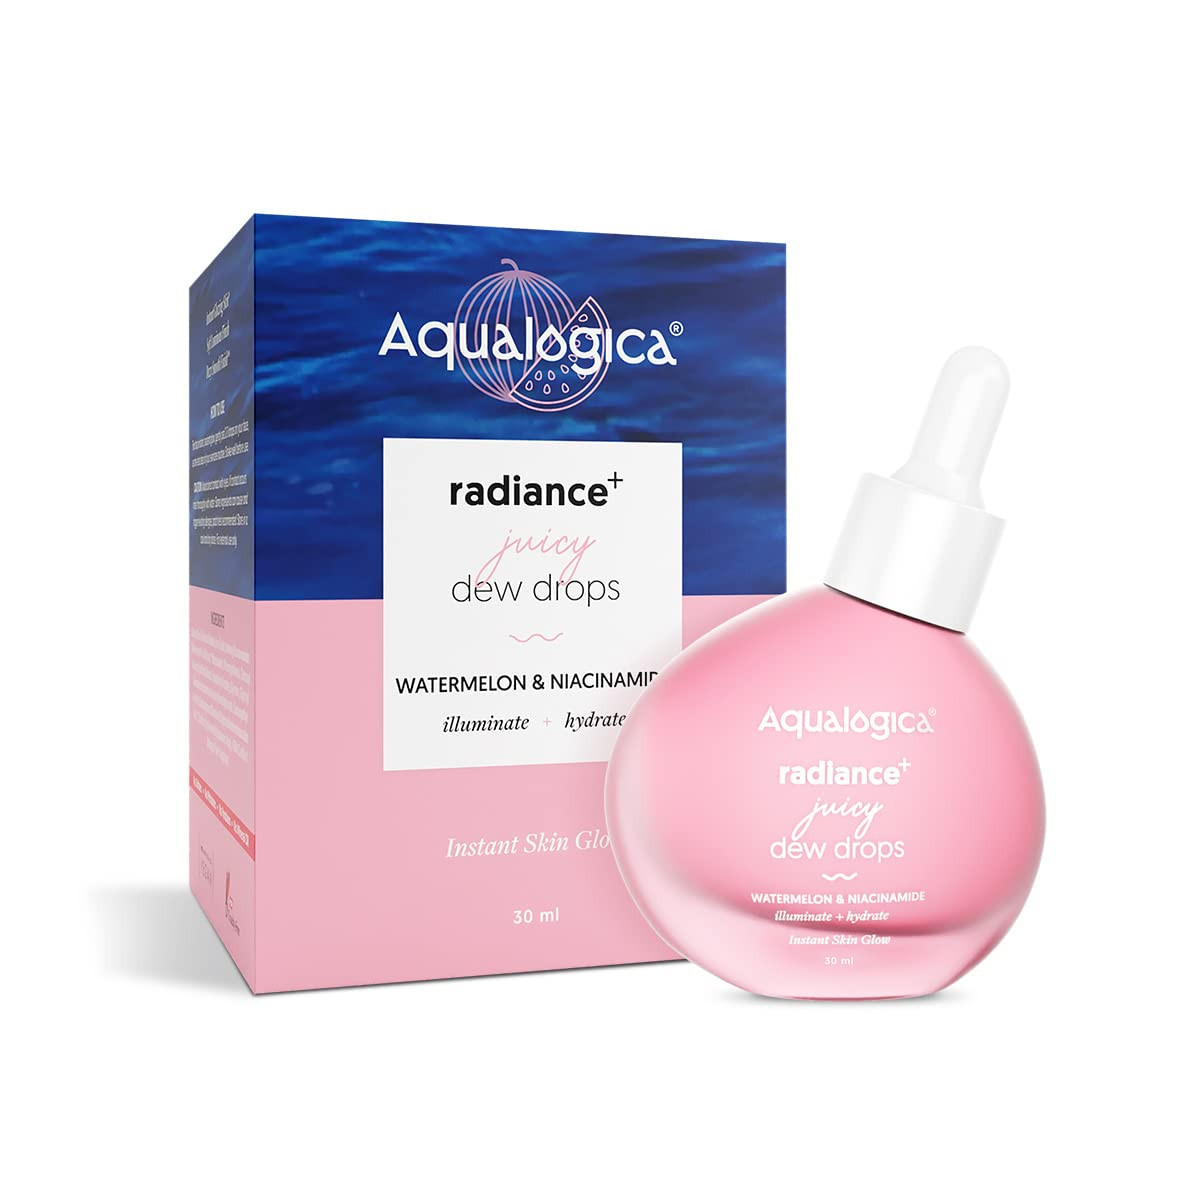 Aqualogica Radiance+ Dew Drops 30Ml